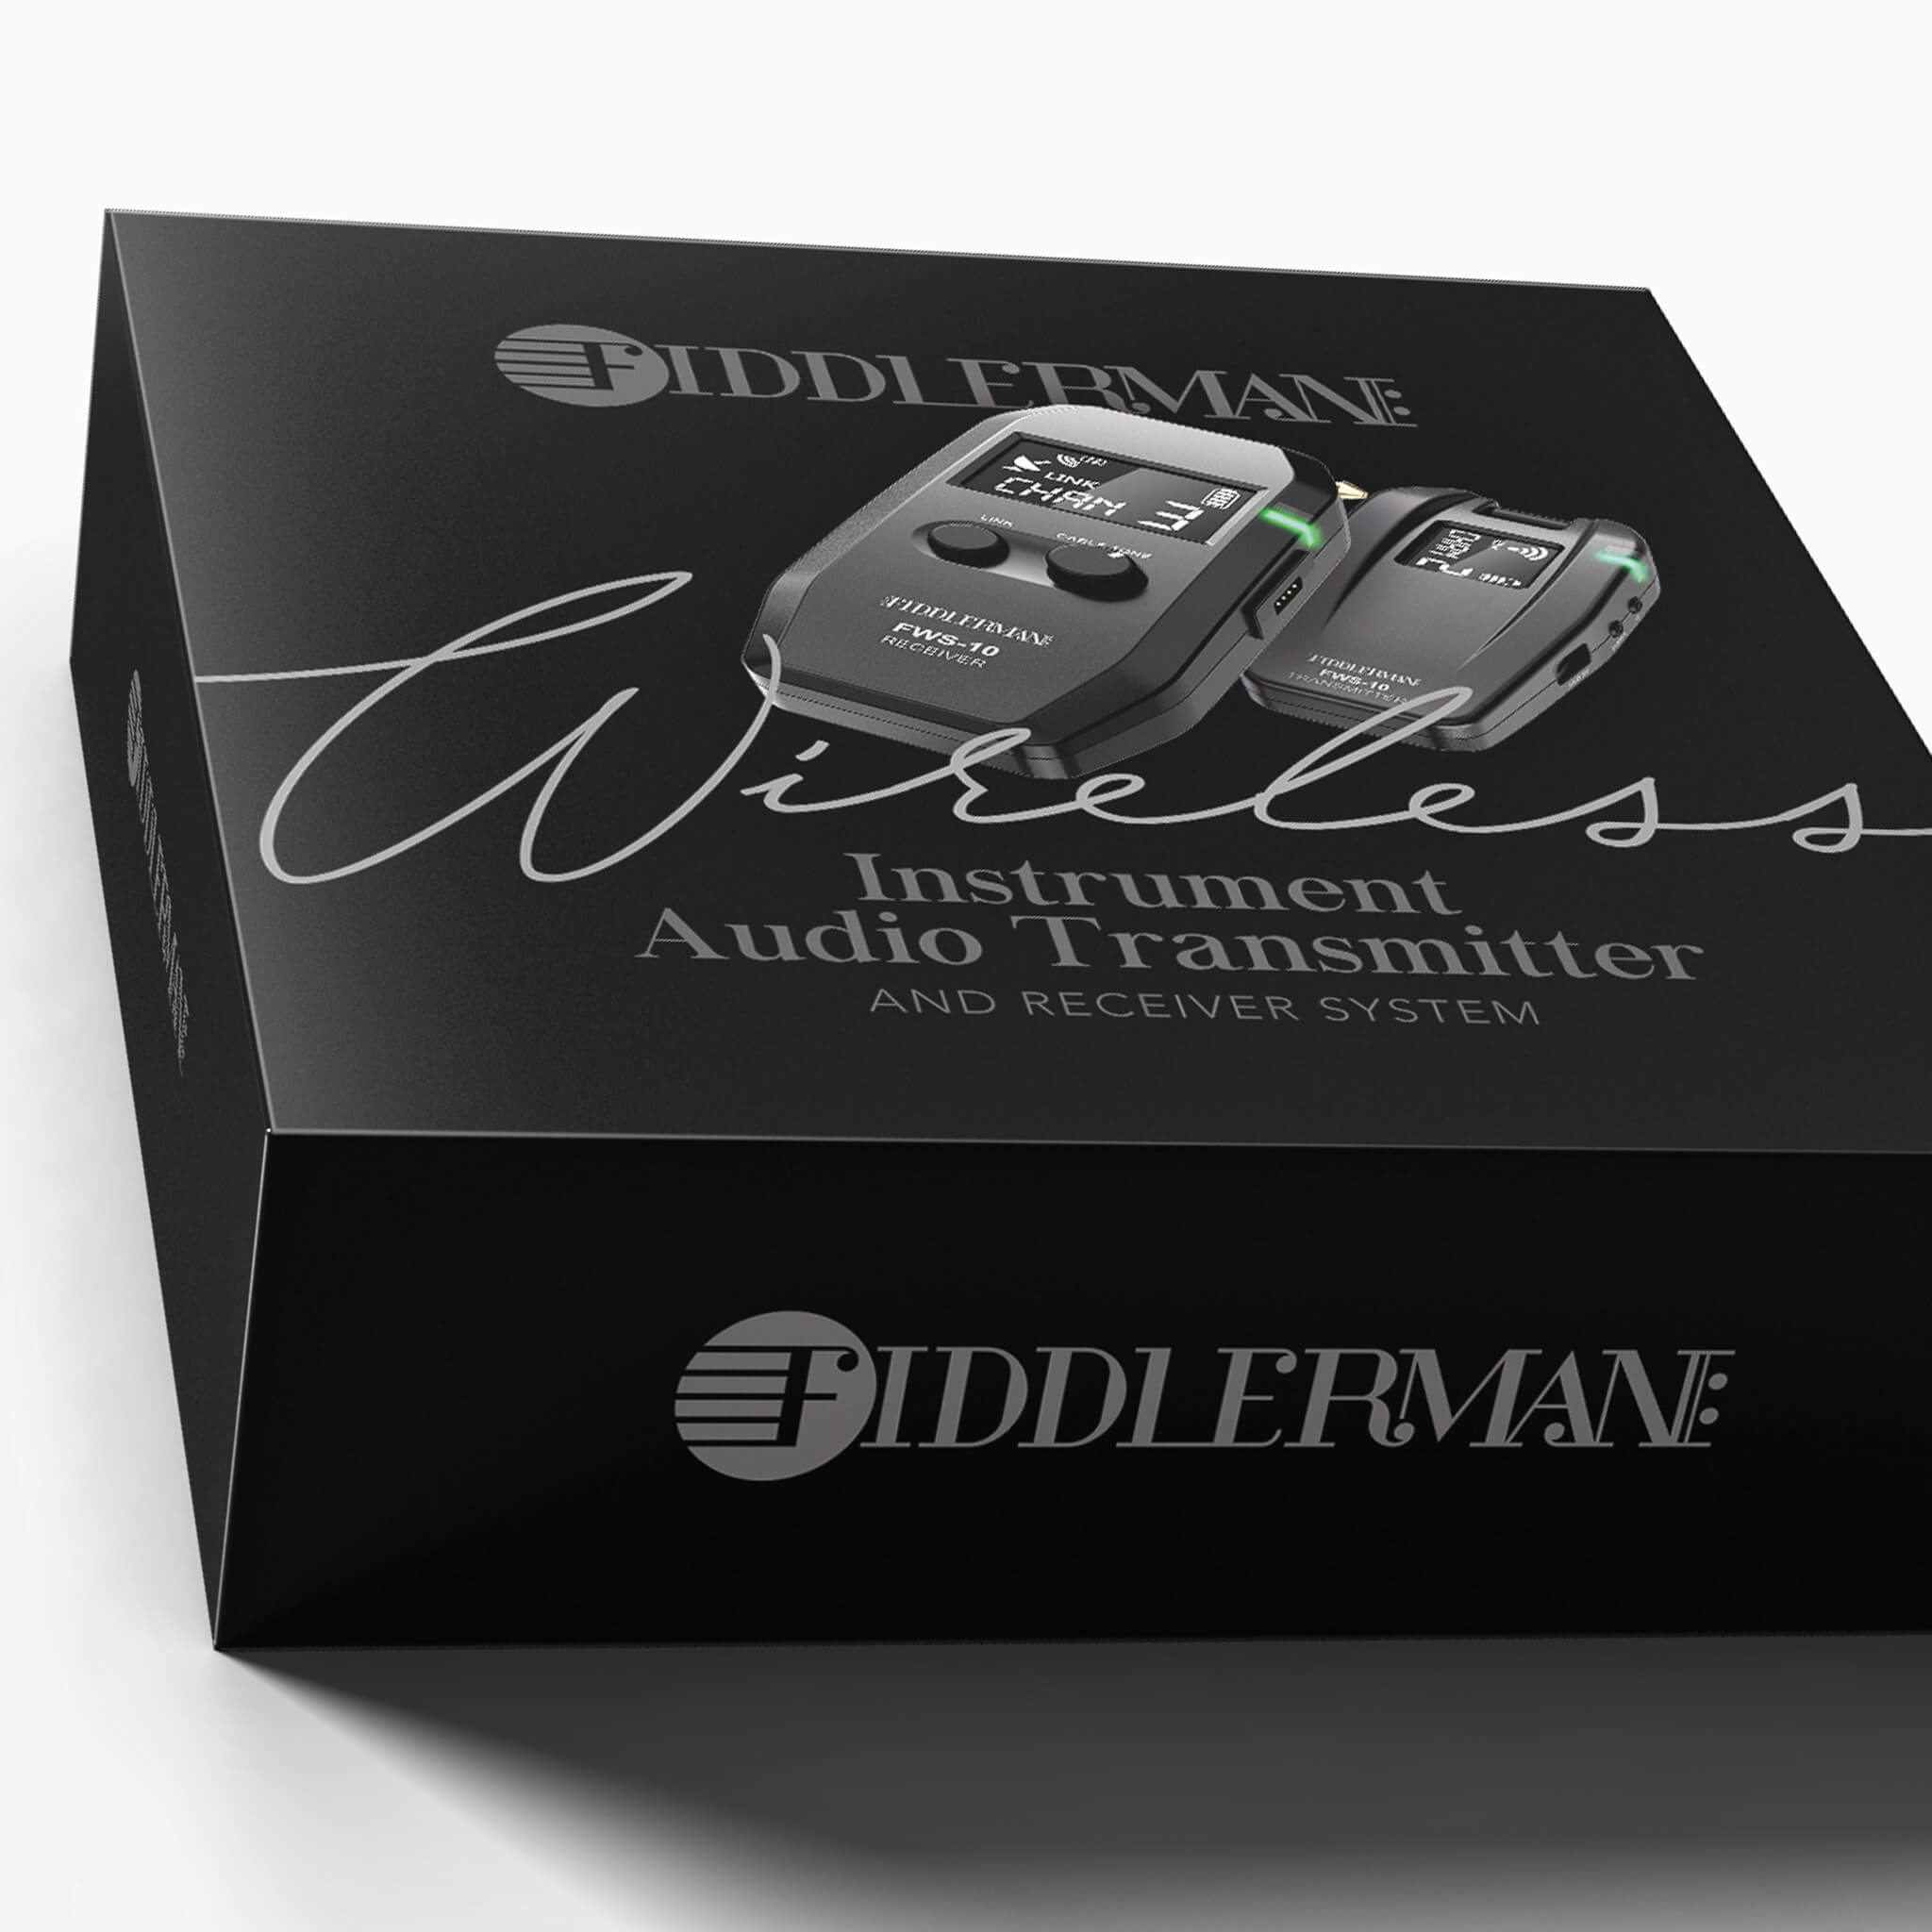 Refurbished Fiddlerman Wireless Violin Transmitter and Receiver System FWS-10